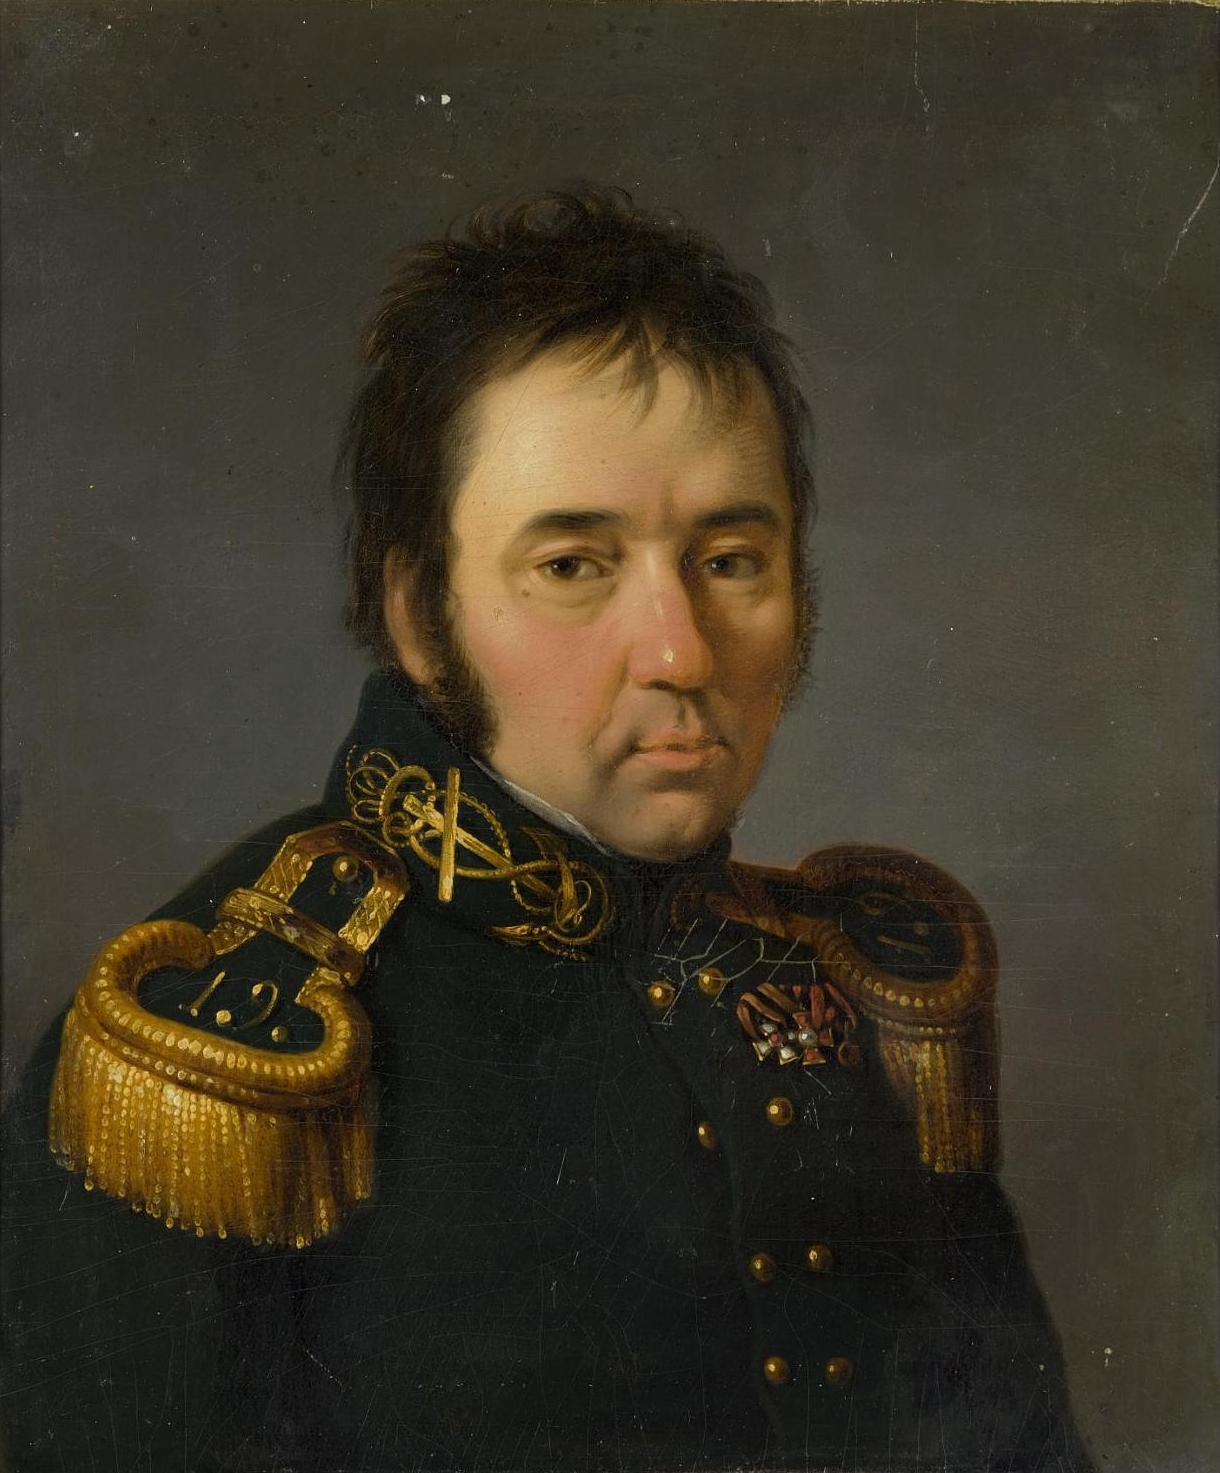 Golovnin (Головнин) Vasily Mikhaylovich (1776 - 1831)